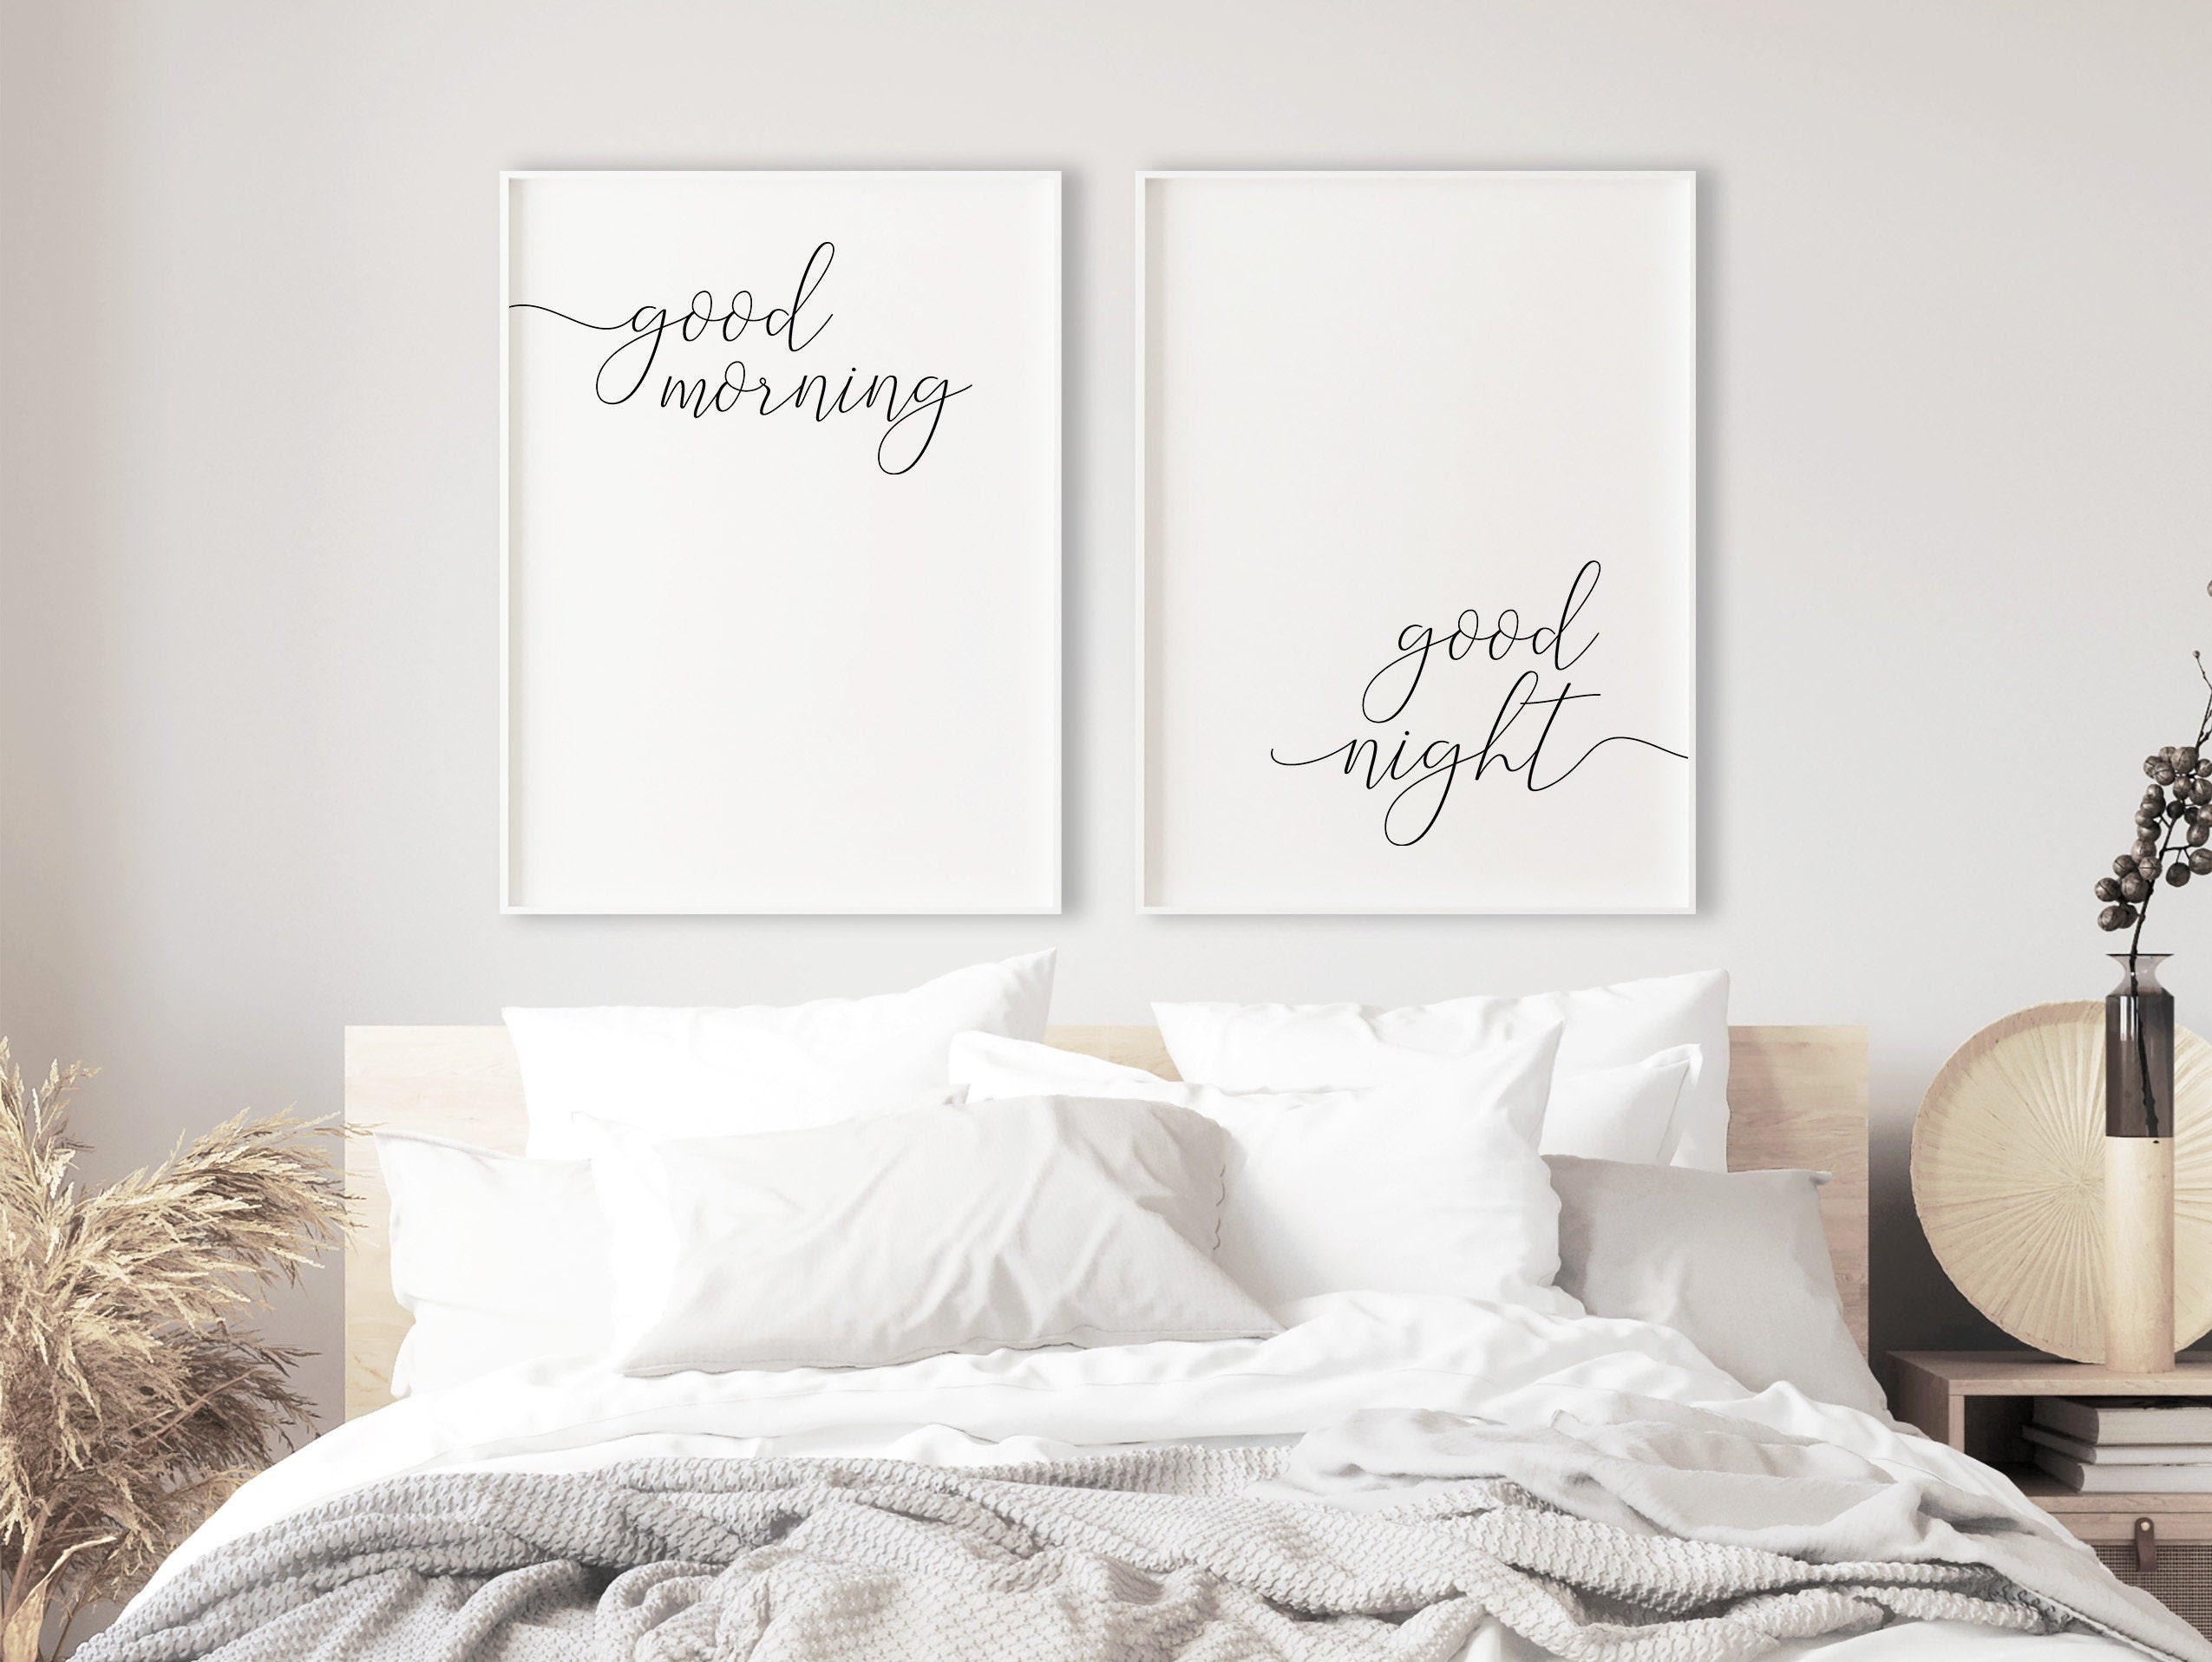 Good morning good night print for master bedroom wall decor | Etsy